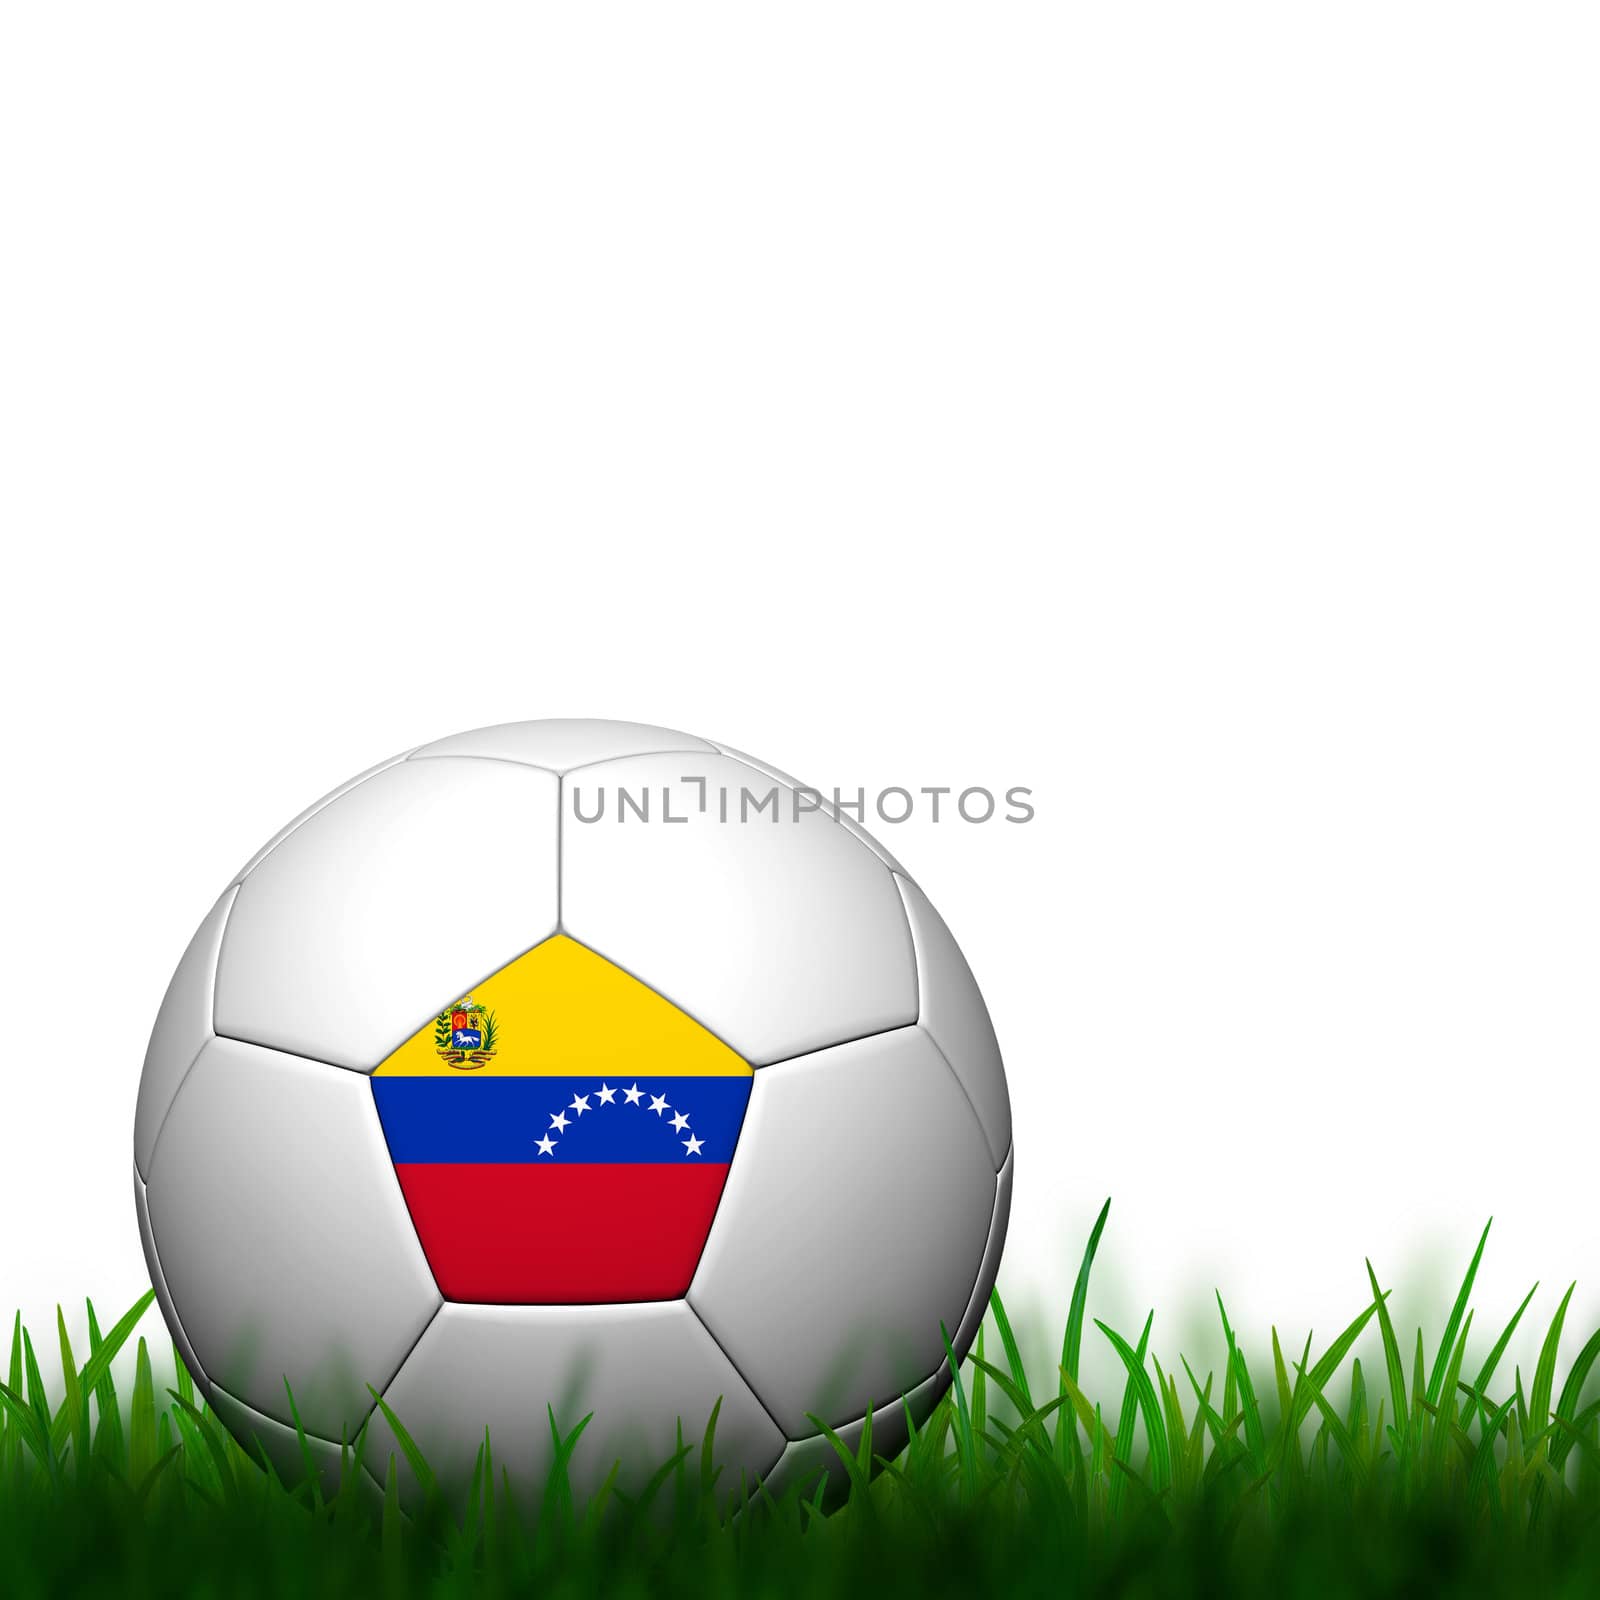 3D Football Venezuela Flag Patter in green grass on white backgr by jakgree